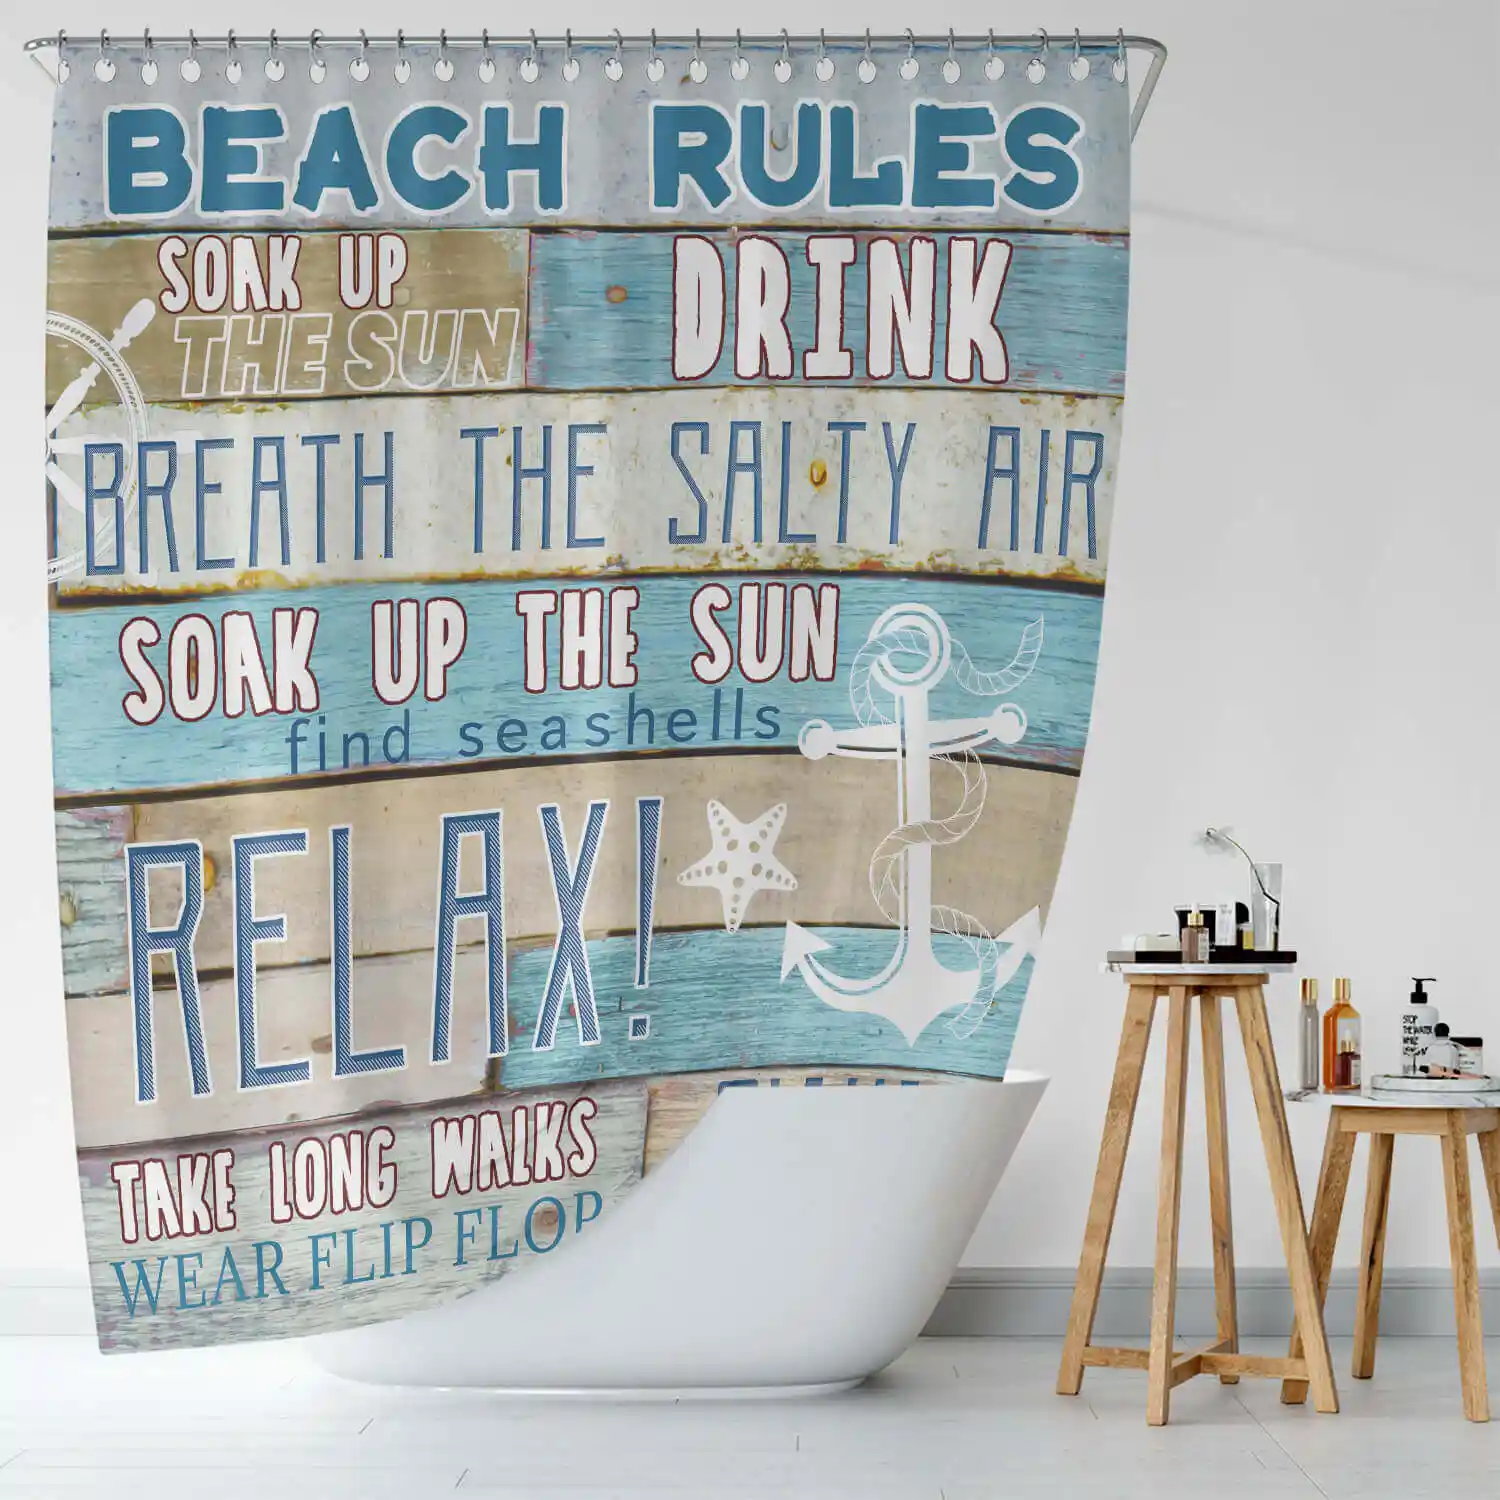 A bathroom with a shower curtain that says beach rules.